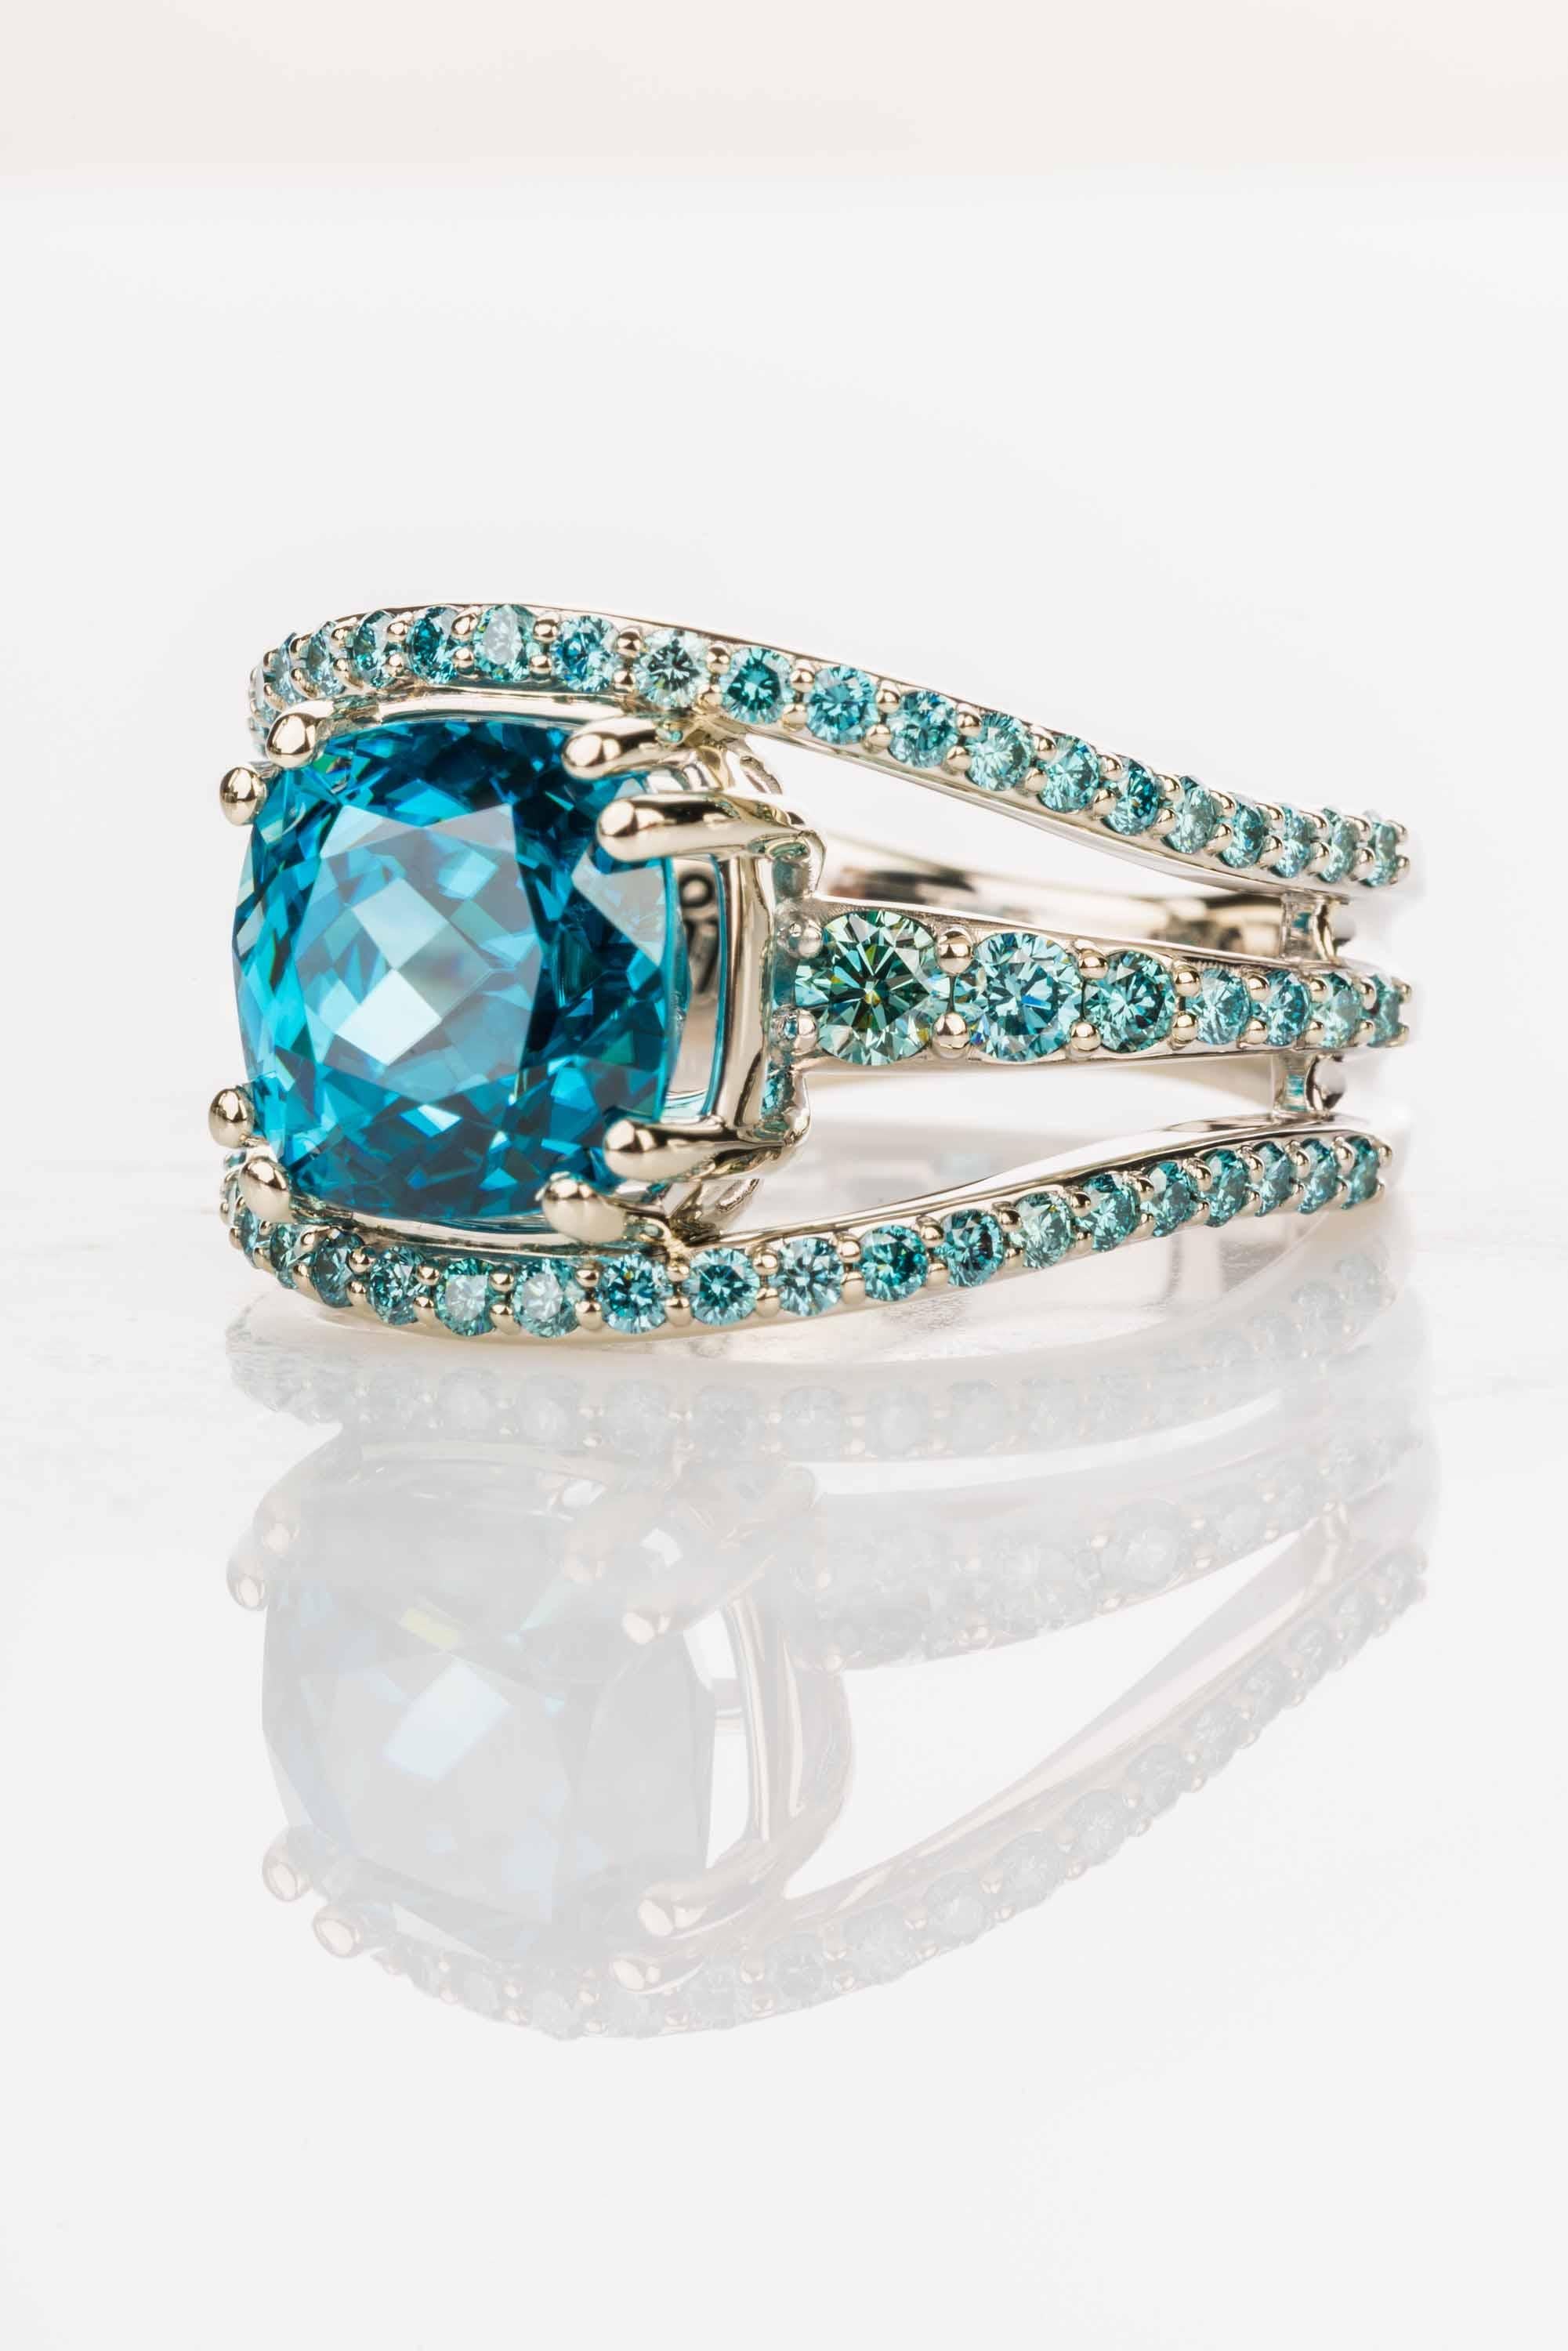 Contemporary 18 Karat White Gold 7.65 Carat Cushion Cut Blue Zircon Ring with Blue Diamonds